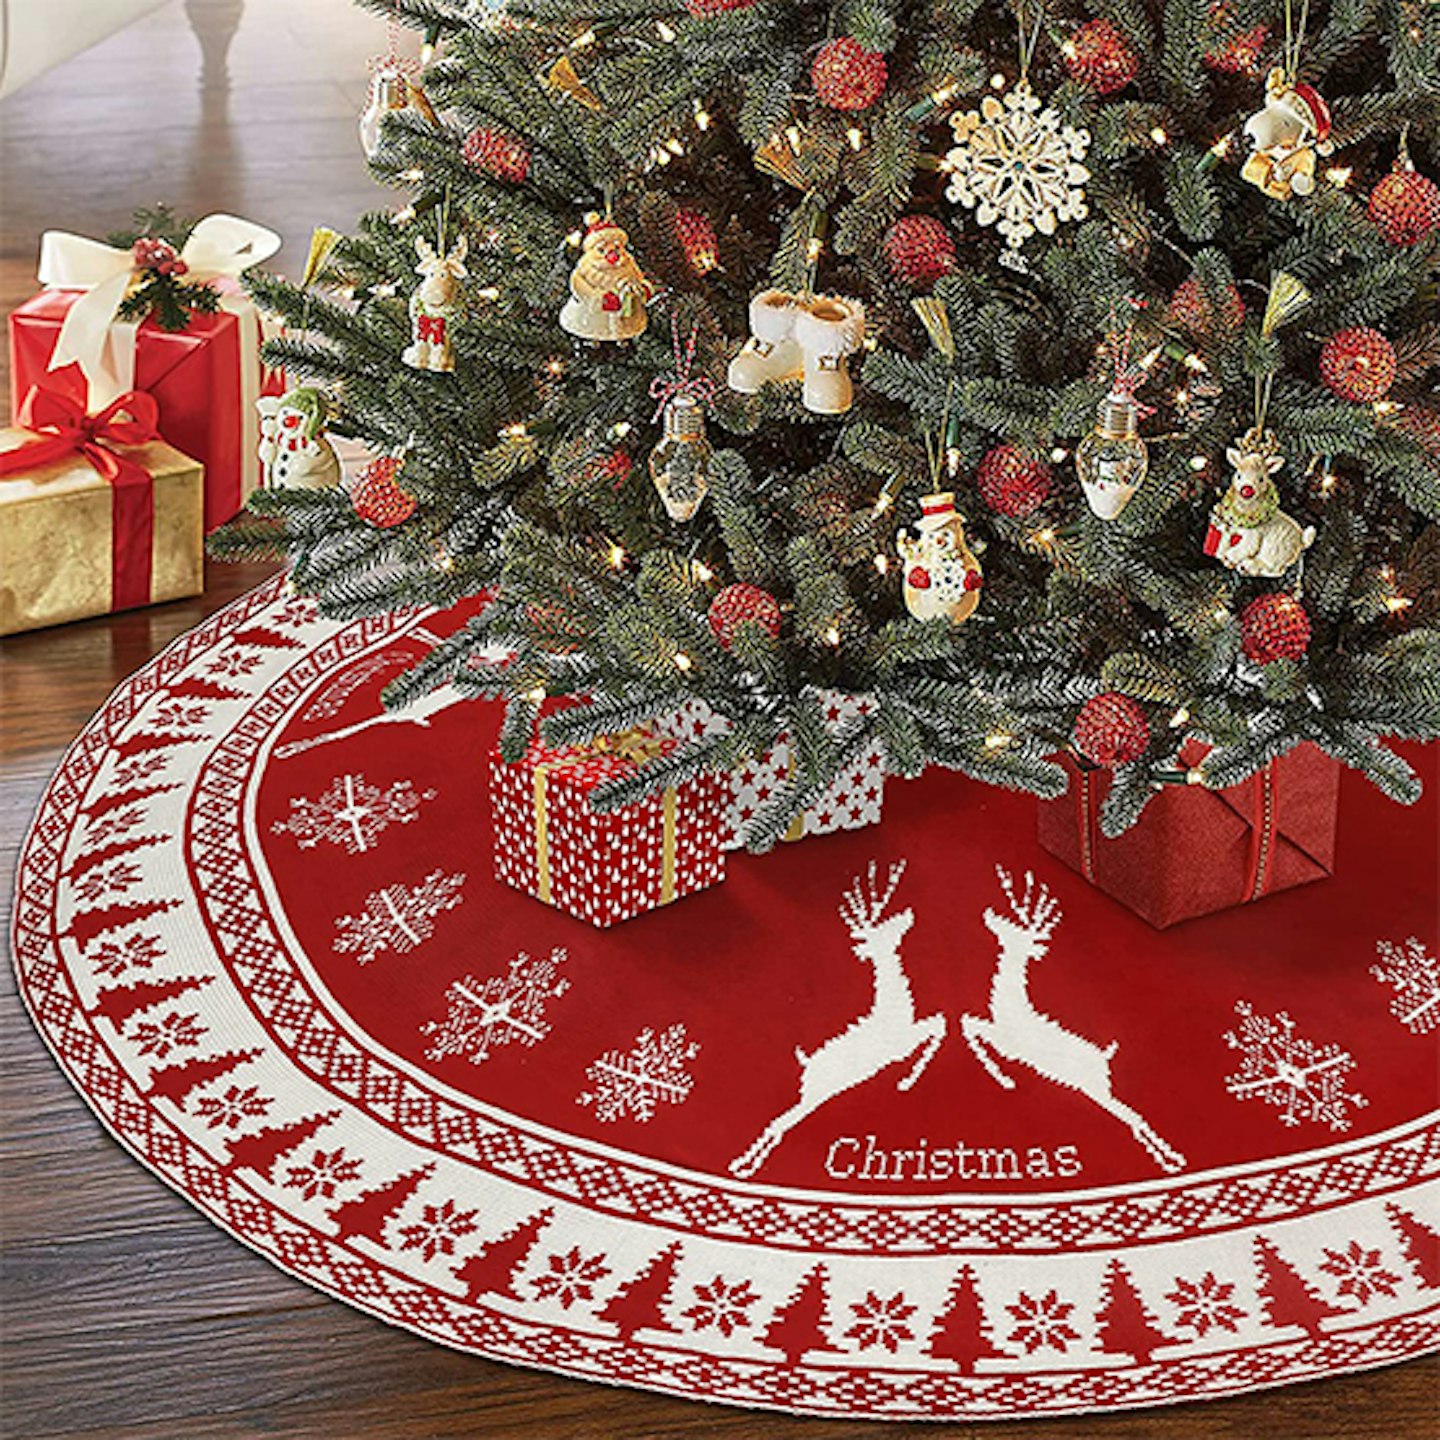 Christmas tree skirt Amazon